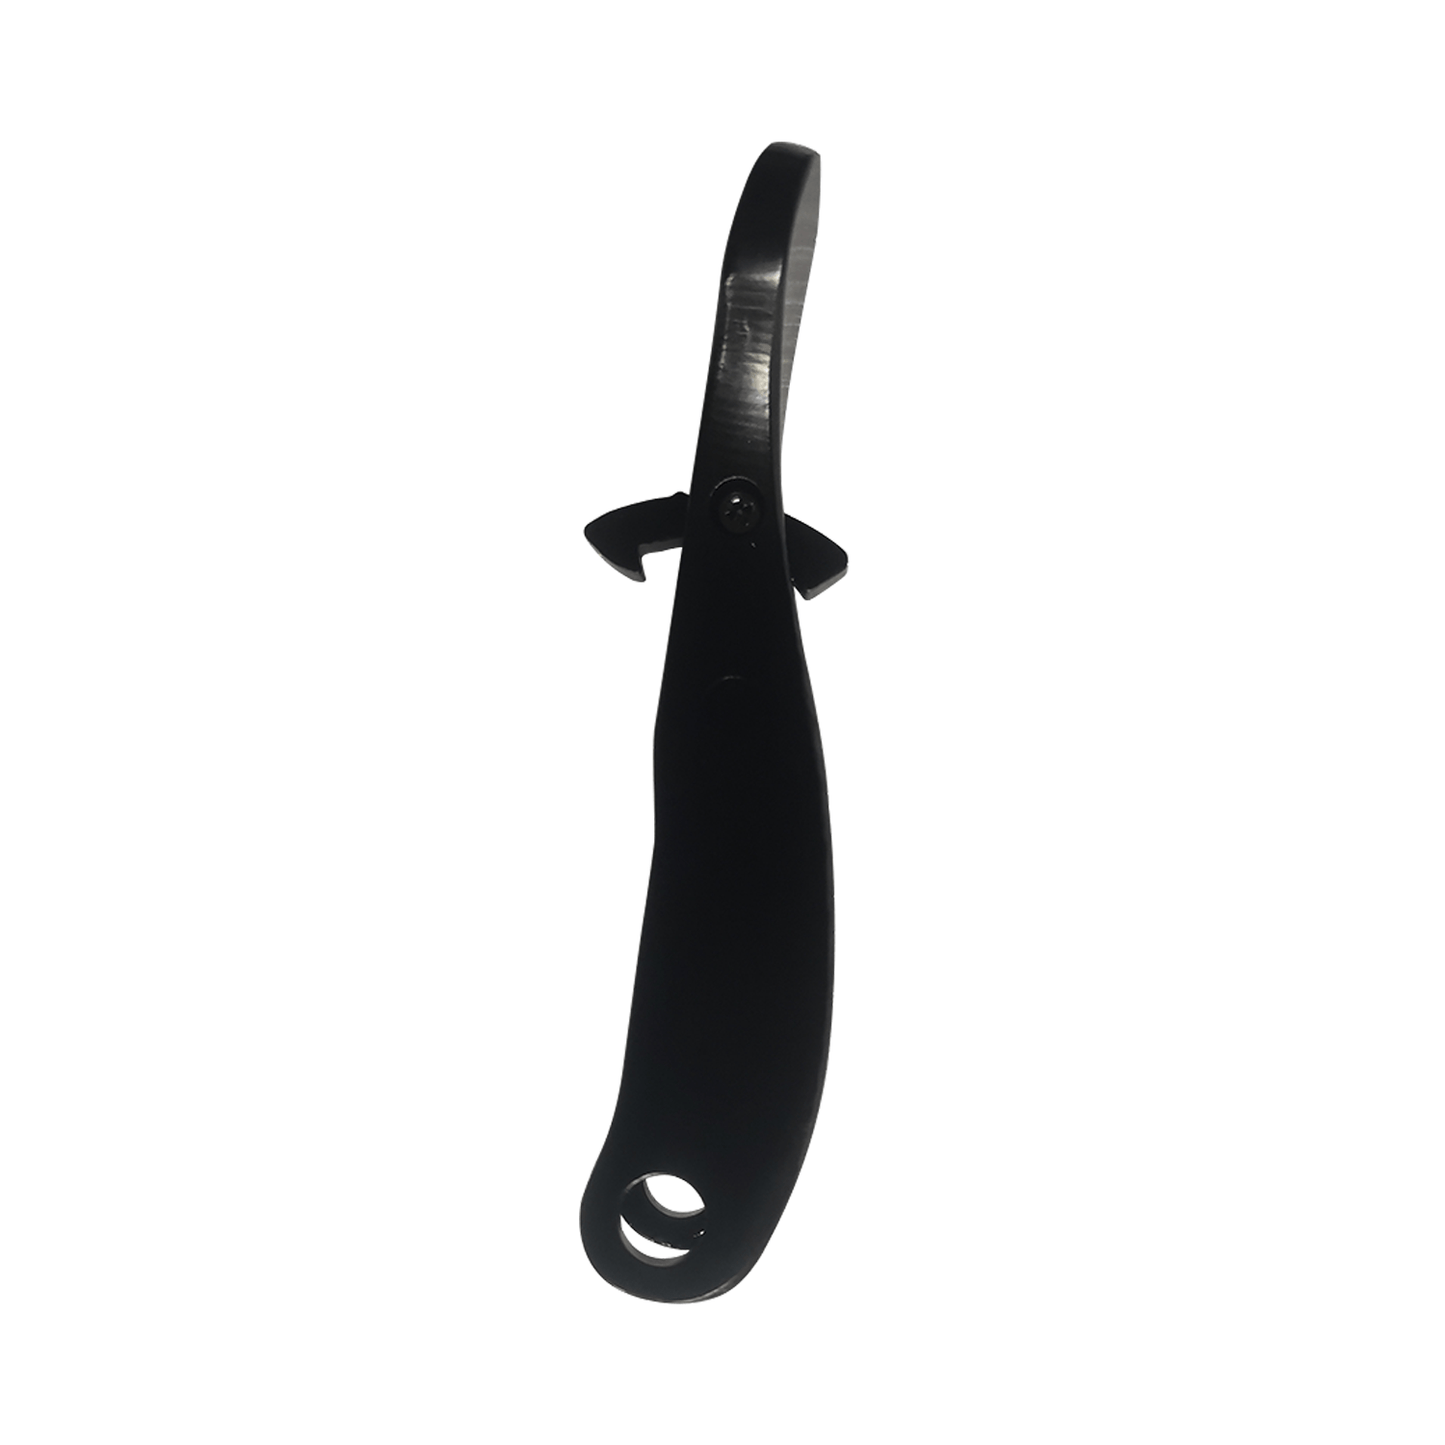 Hiboy MAX3 folding handle ( Old version)